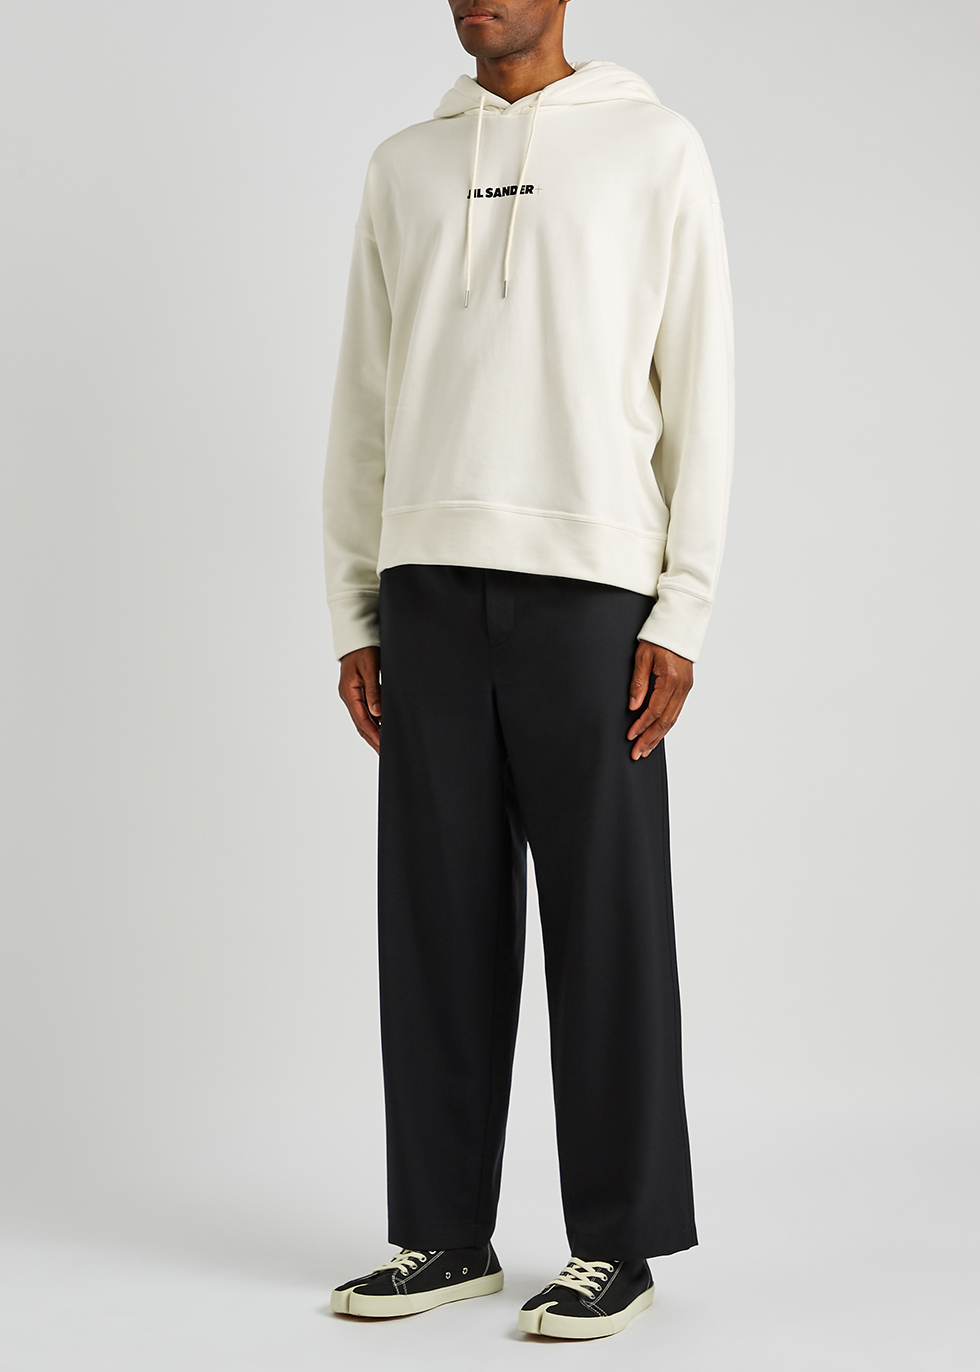 Jil Sander Off-white logo hooded cotton sweatshirt - Harvey Nichols